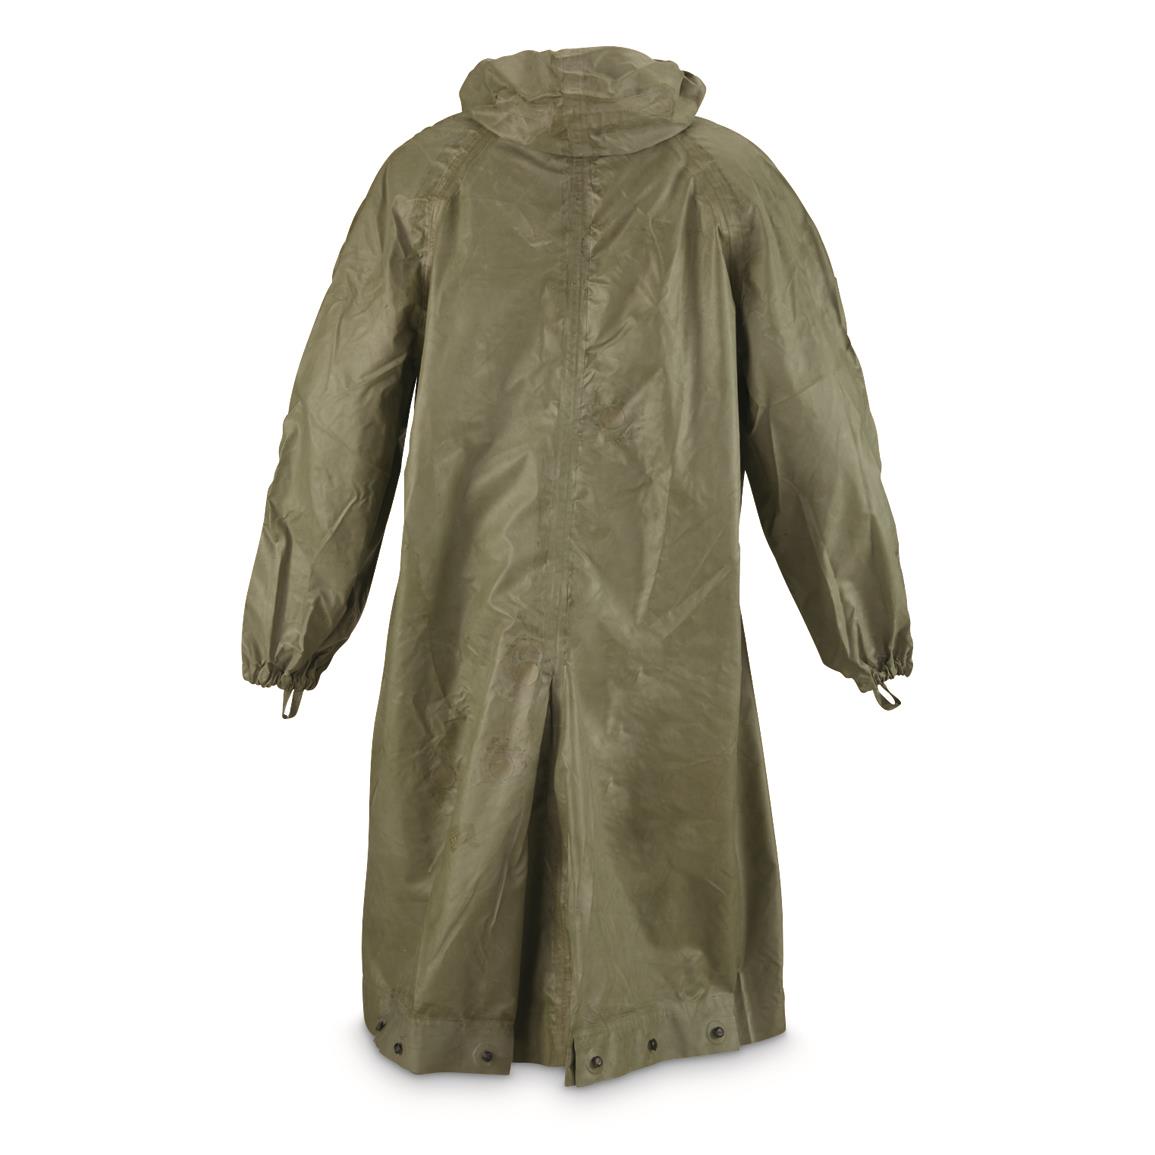 Polish Military Surplus Raincoat, Like New - 674529, Camo Rain Gear ...